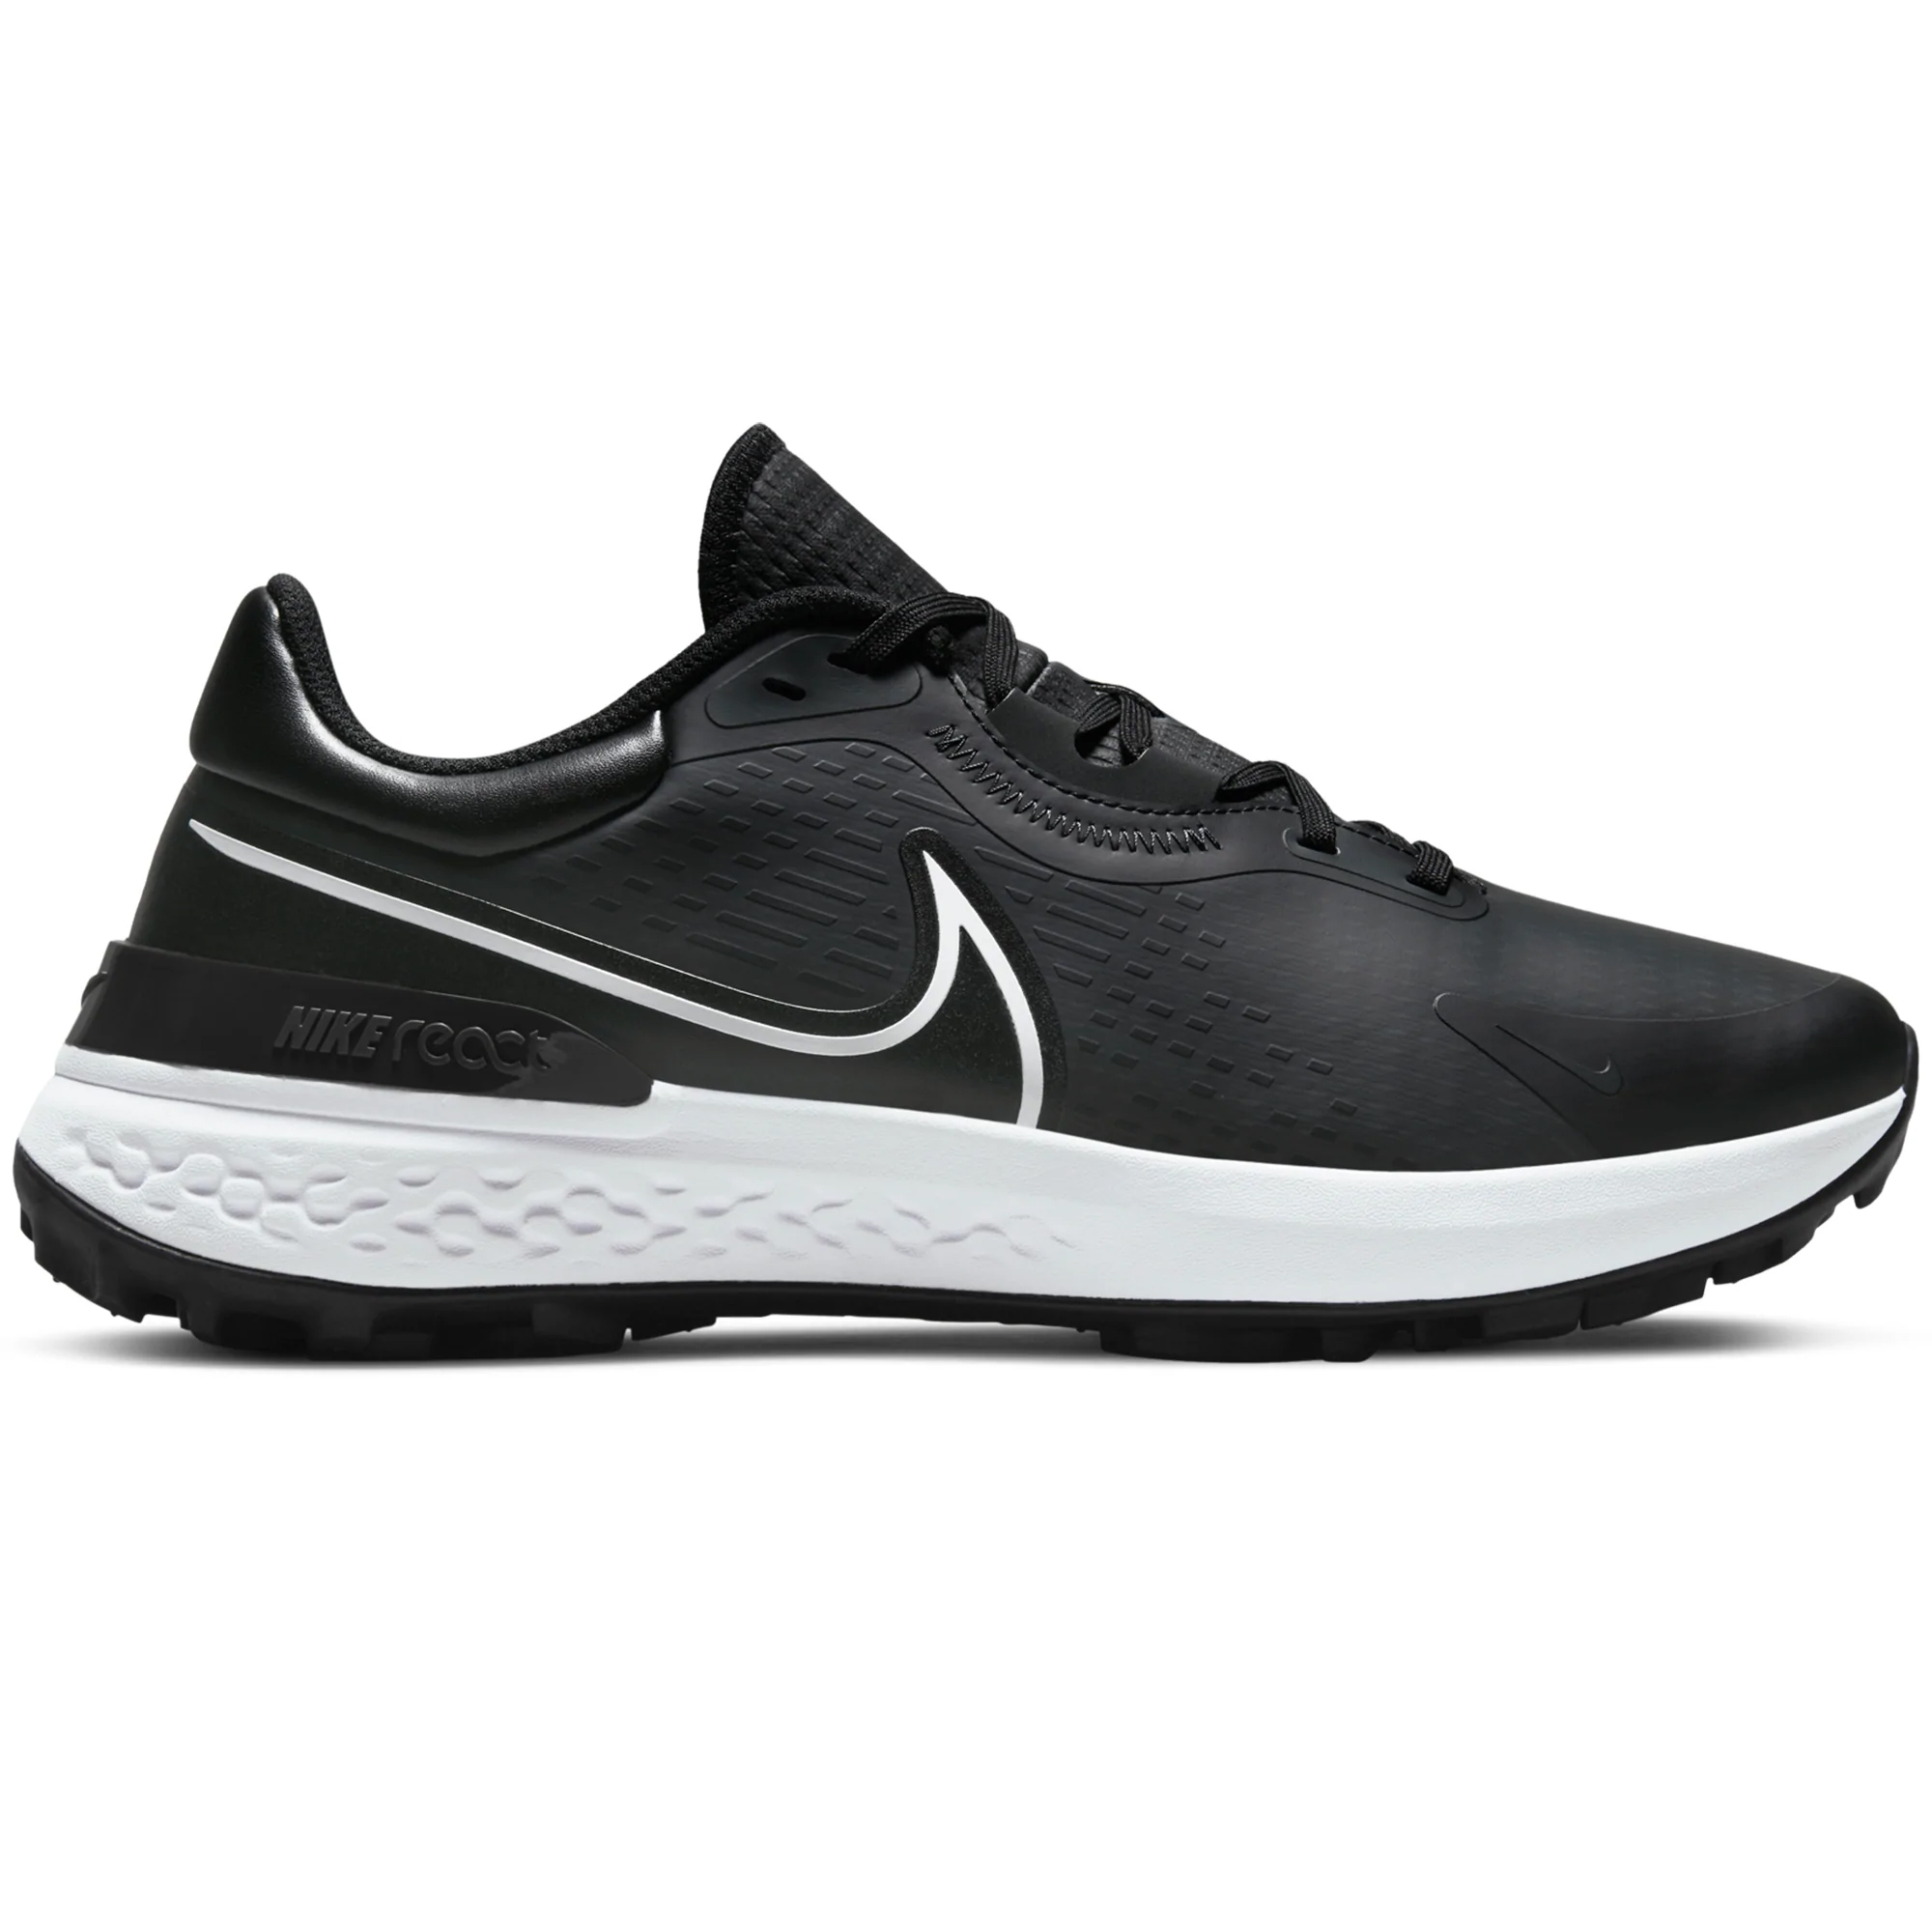 Nike Infinity Pro 2 Mens Spikeless Golf Shoes  - Black/White/Dark Smoke/Igloo